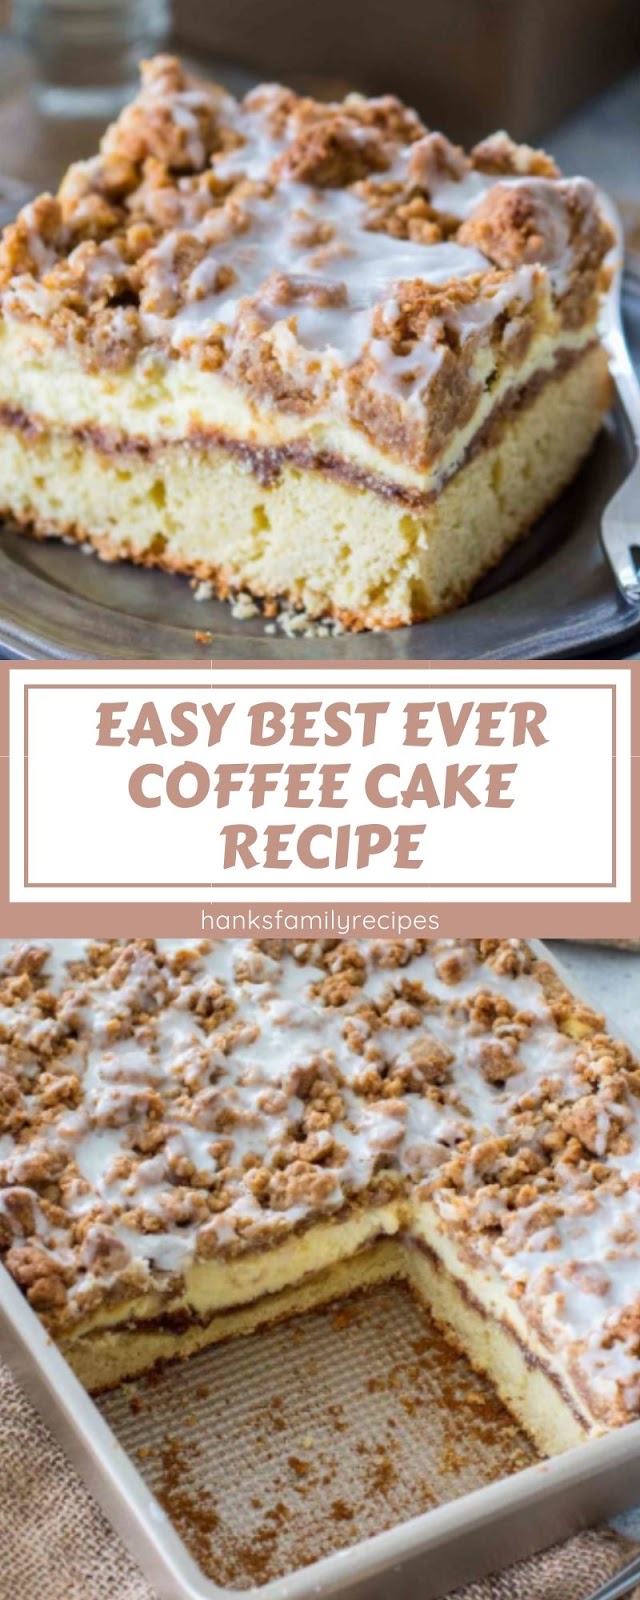 EASY BEST EVER COFFEE CAKE RECIPE